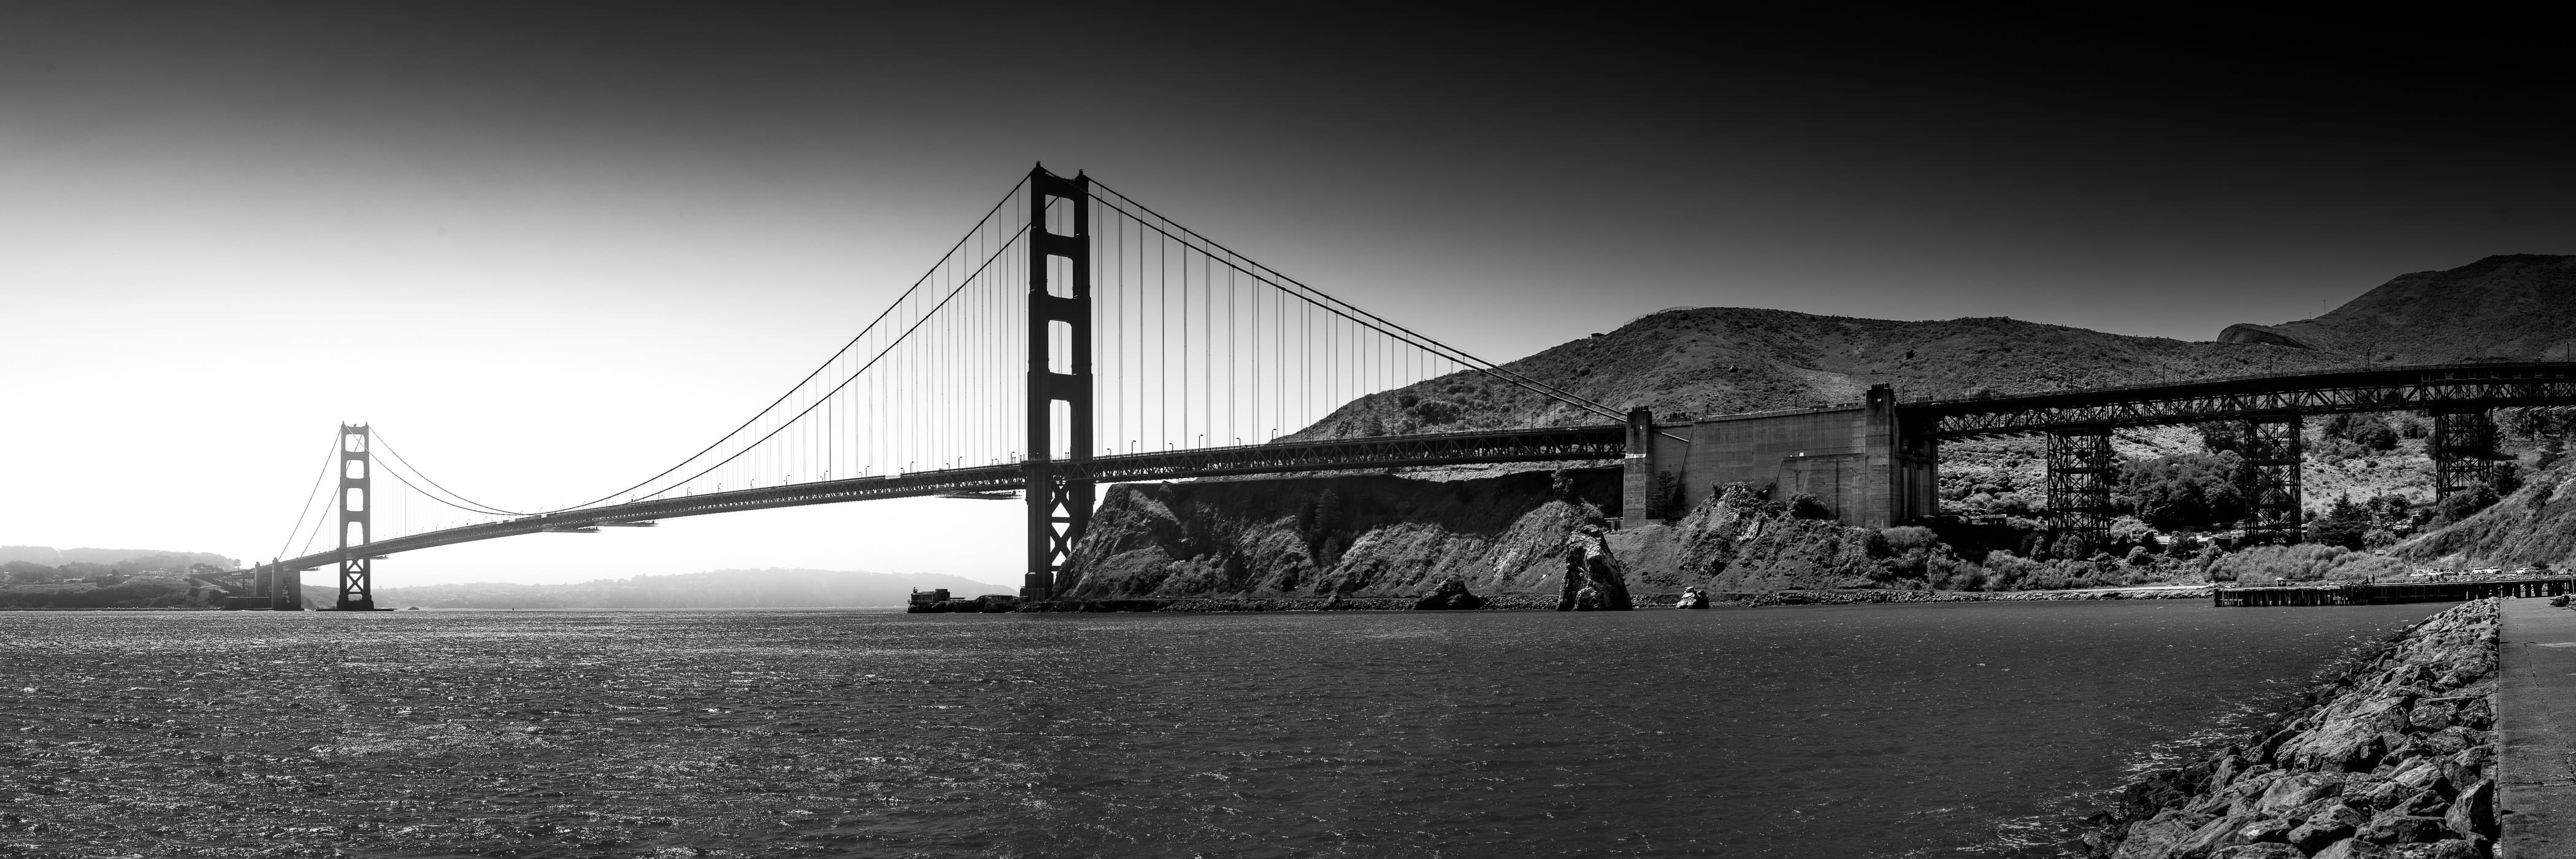 The Golden Gate Bridge spans the entrance to San Francisco Bay.